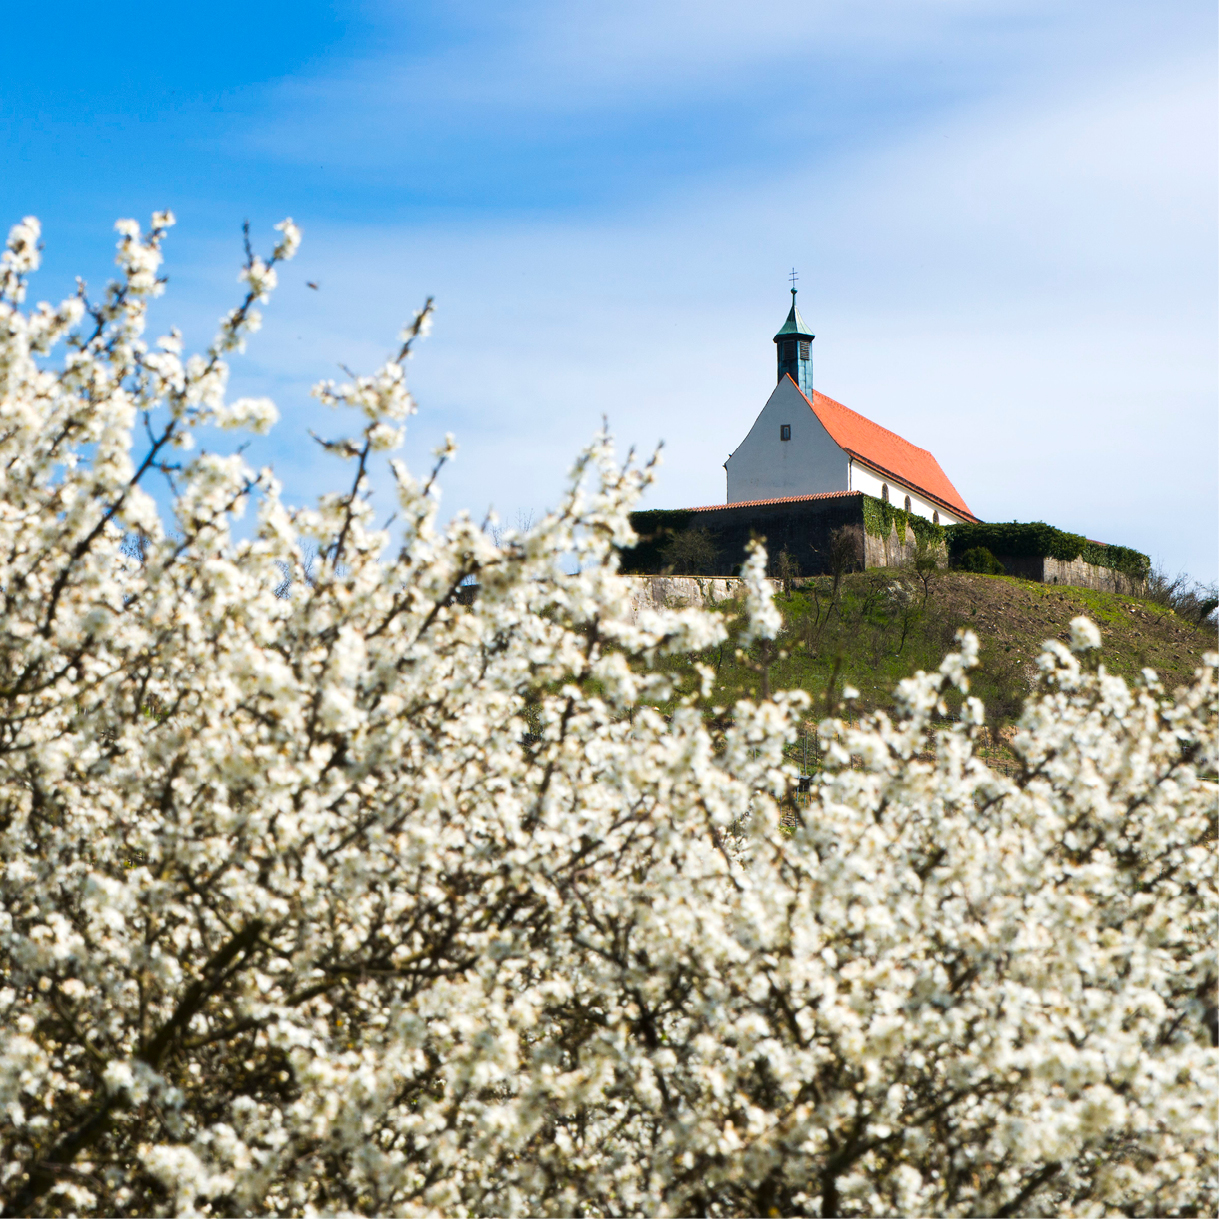 Apfelbaumblüte mit Wurmlinger Kapelle